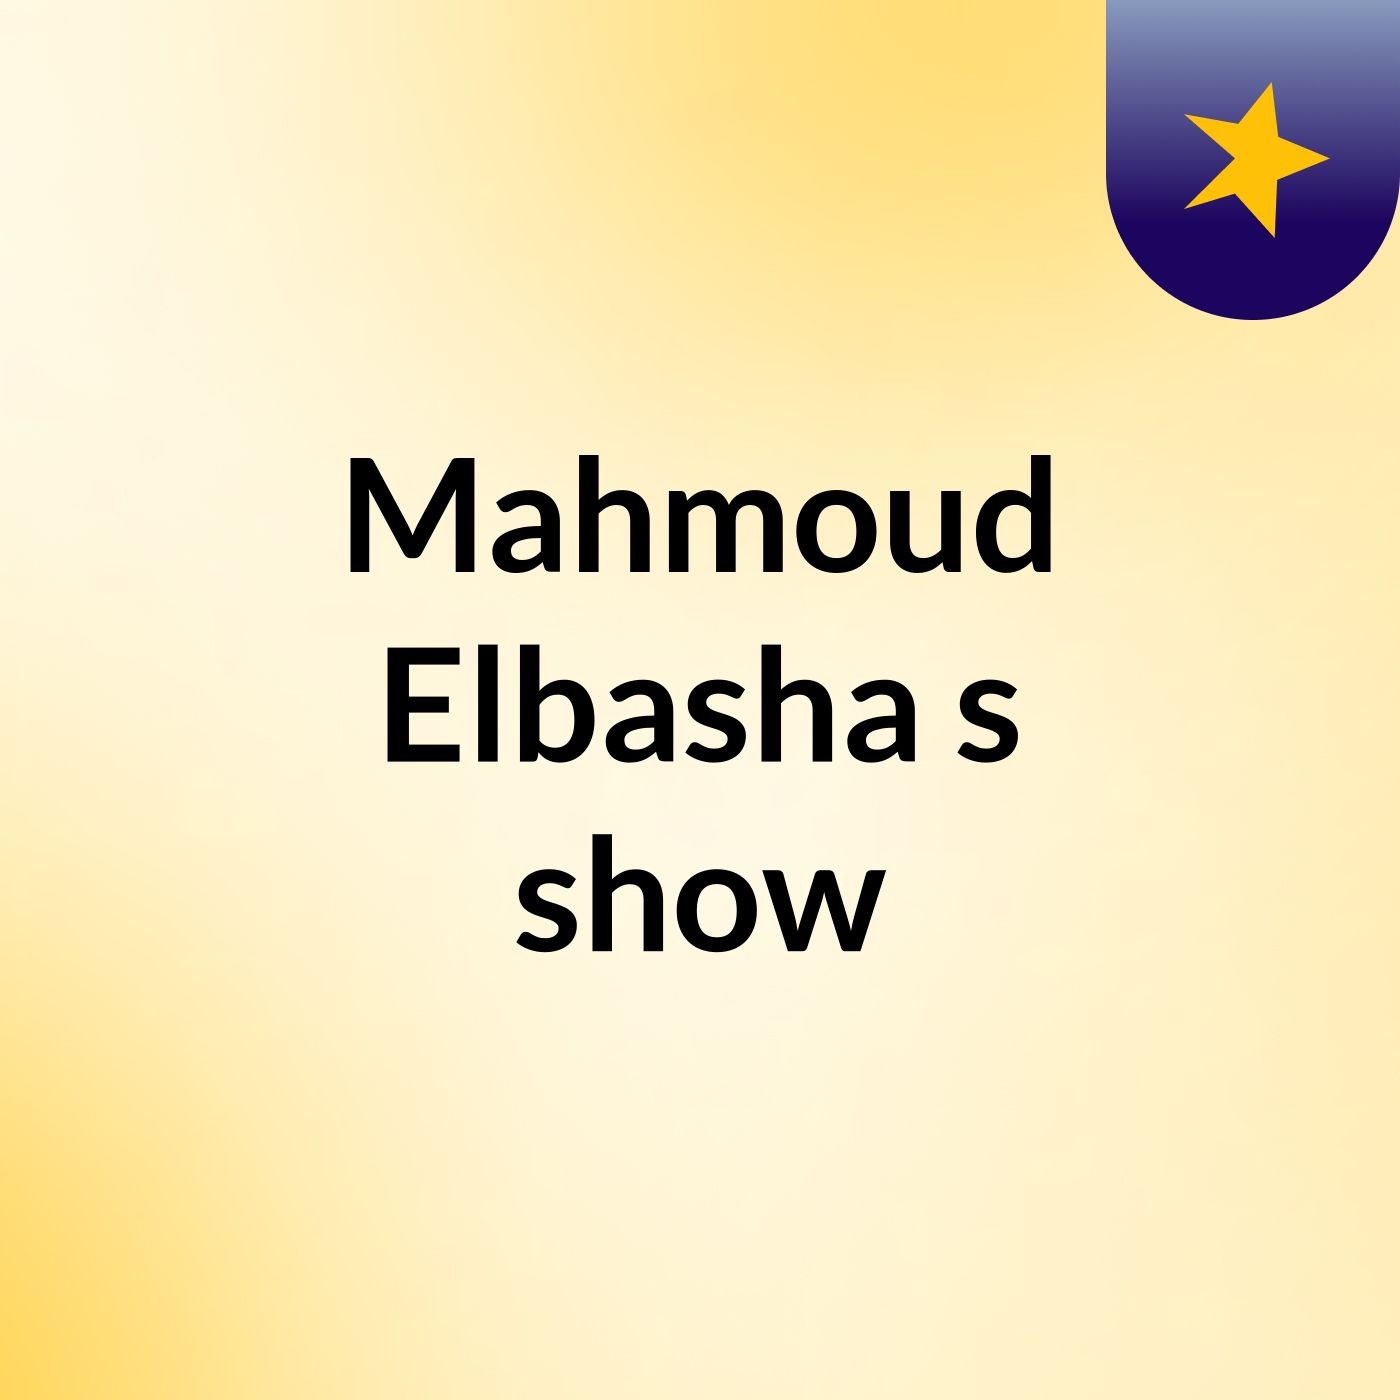 Mahmoud Elbasha's show